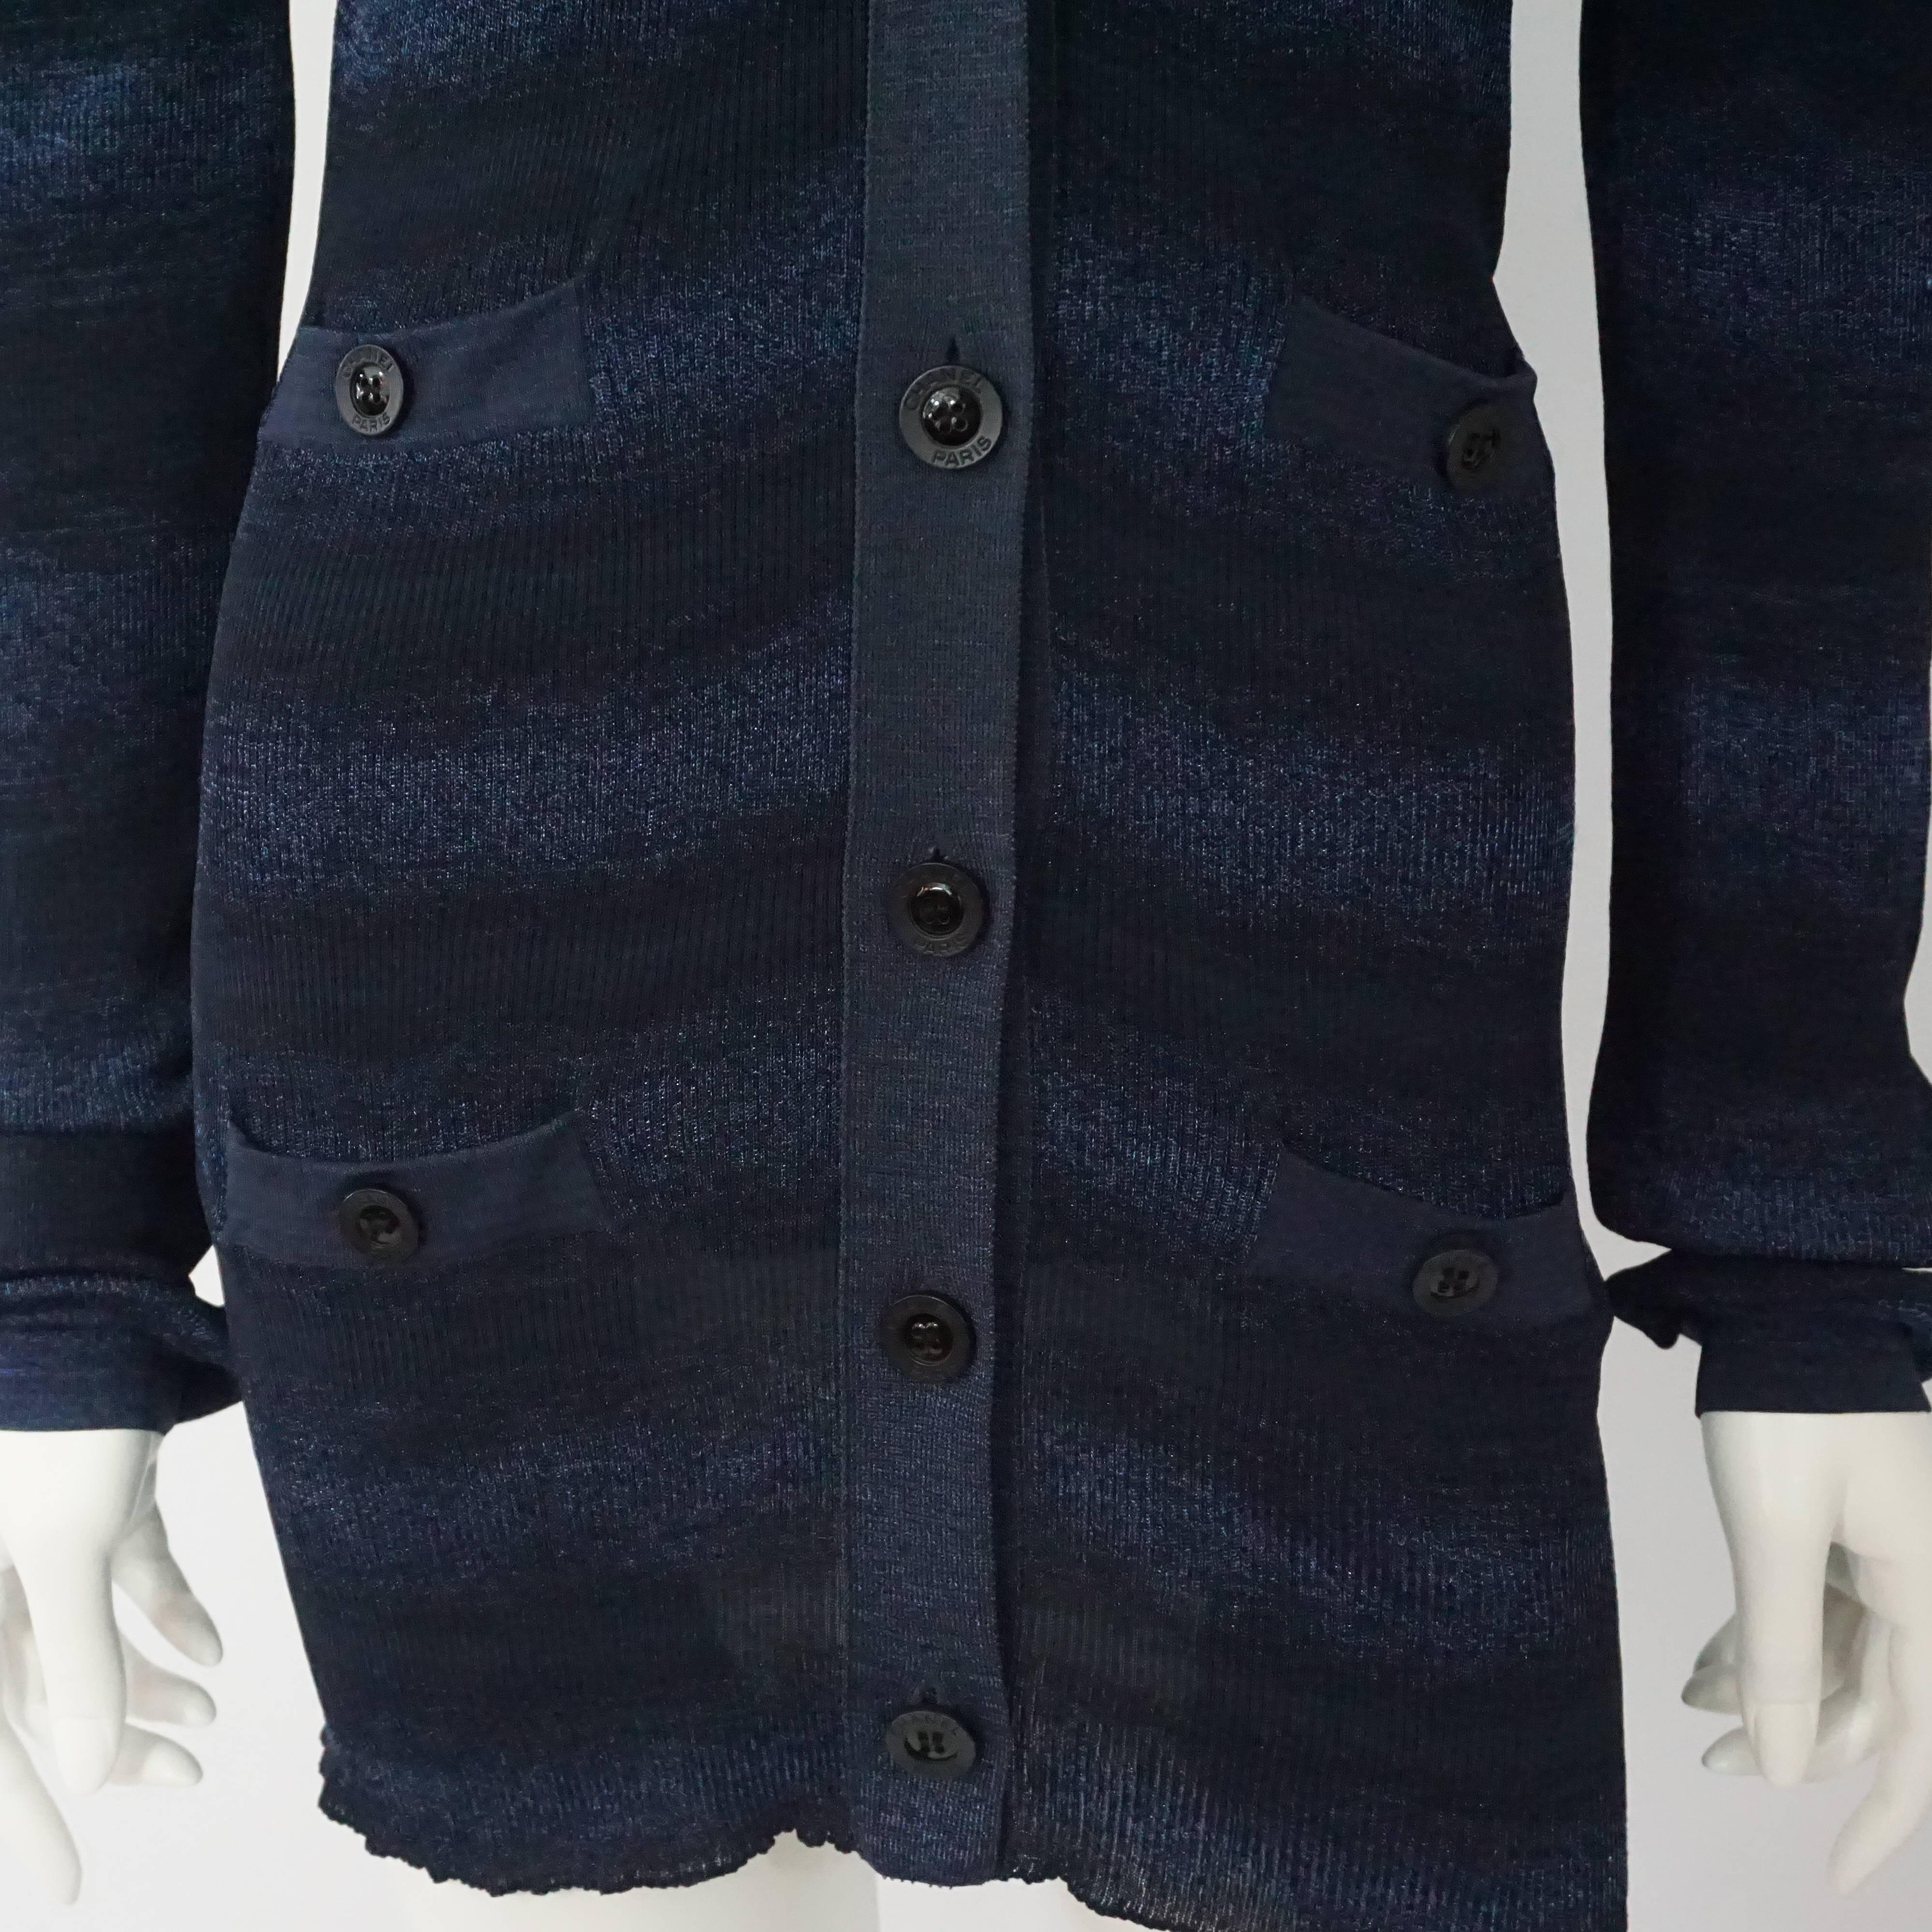 Women's Chanel Two Tone Stripe Navy Long Sweater Set - 42 